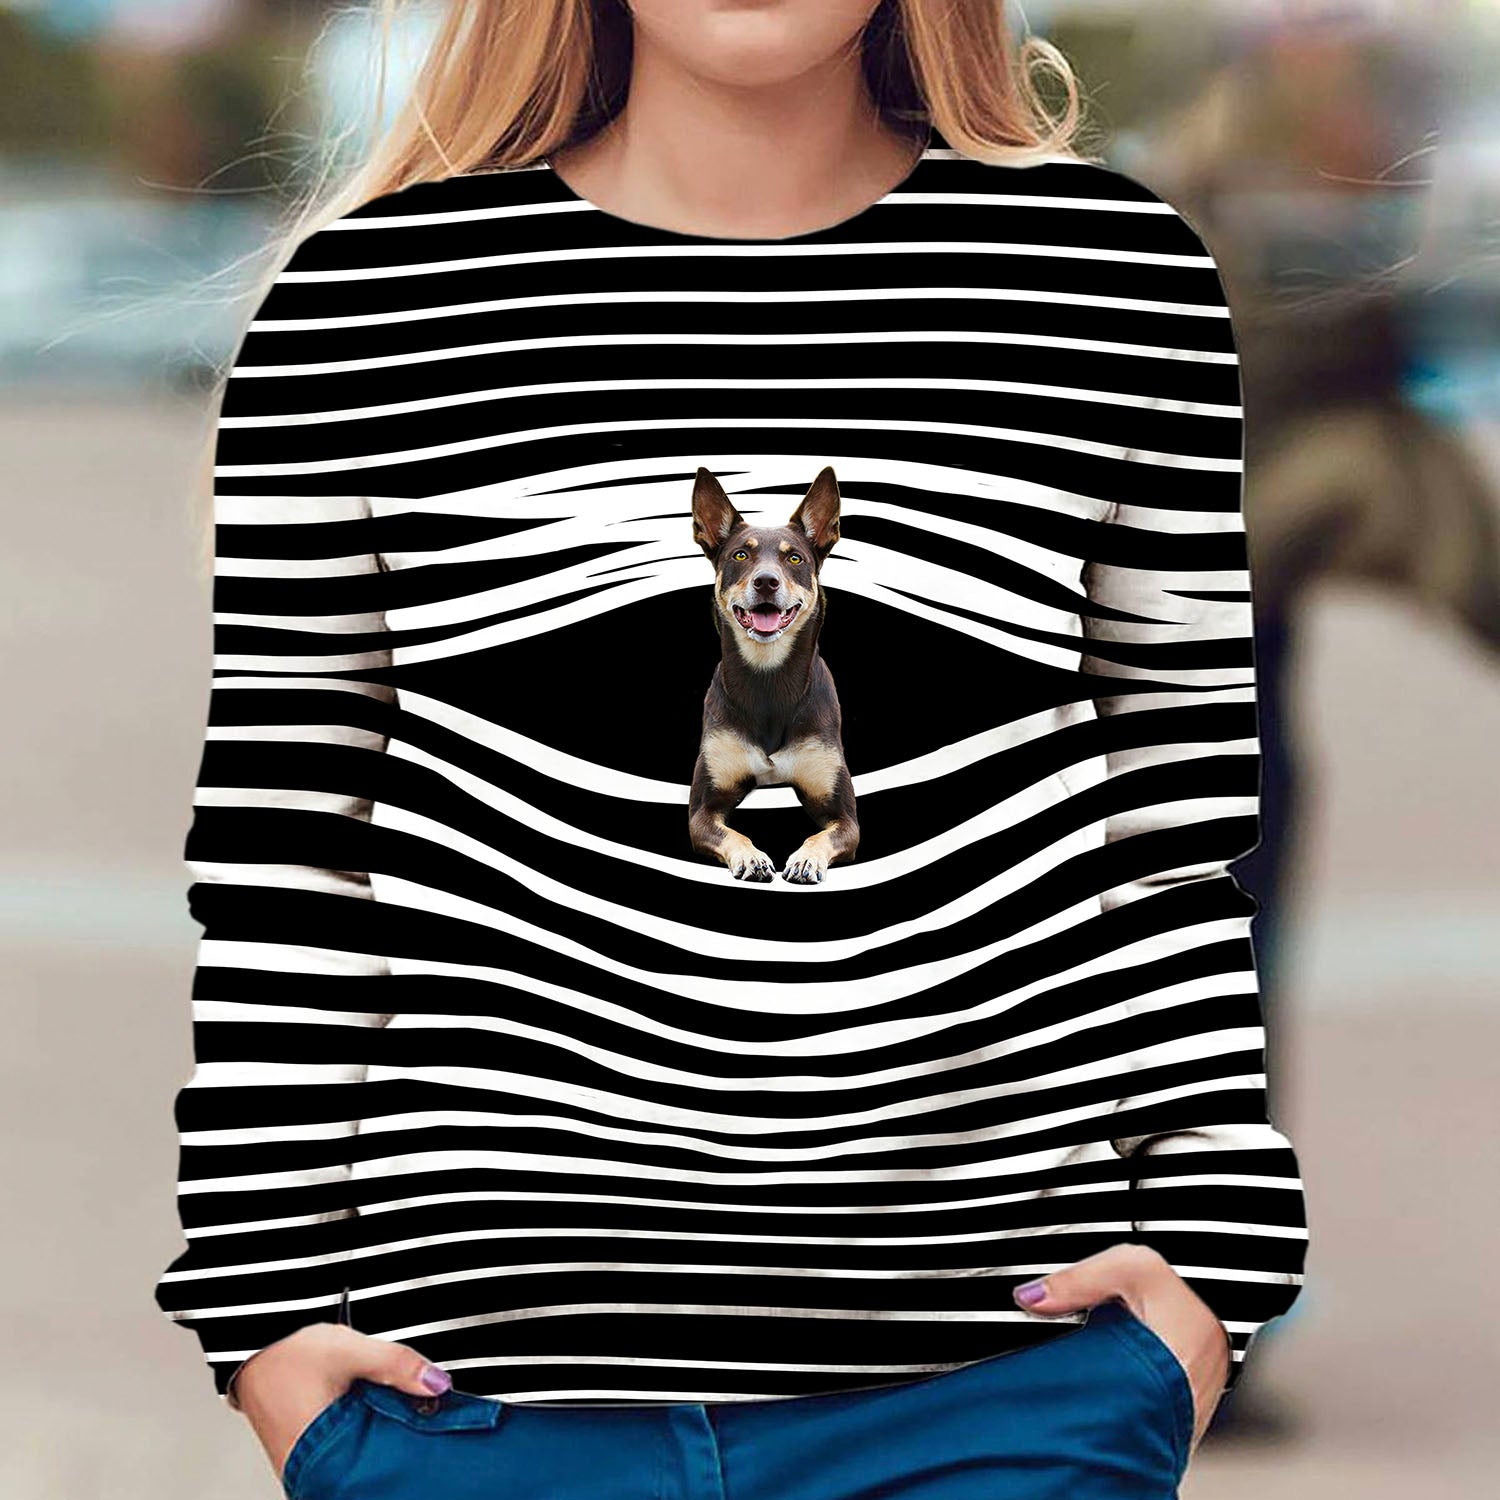 Australian Kelpie - Stripe - Premium Sweater